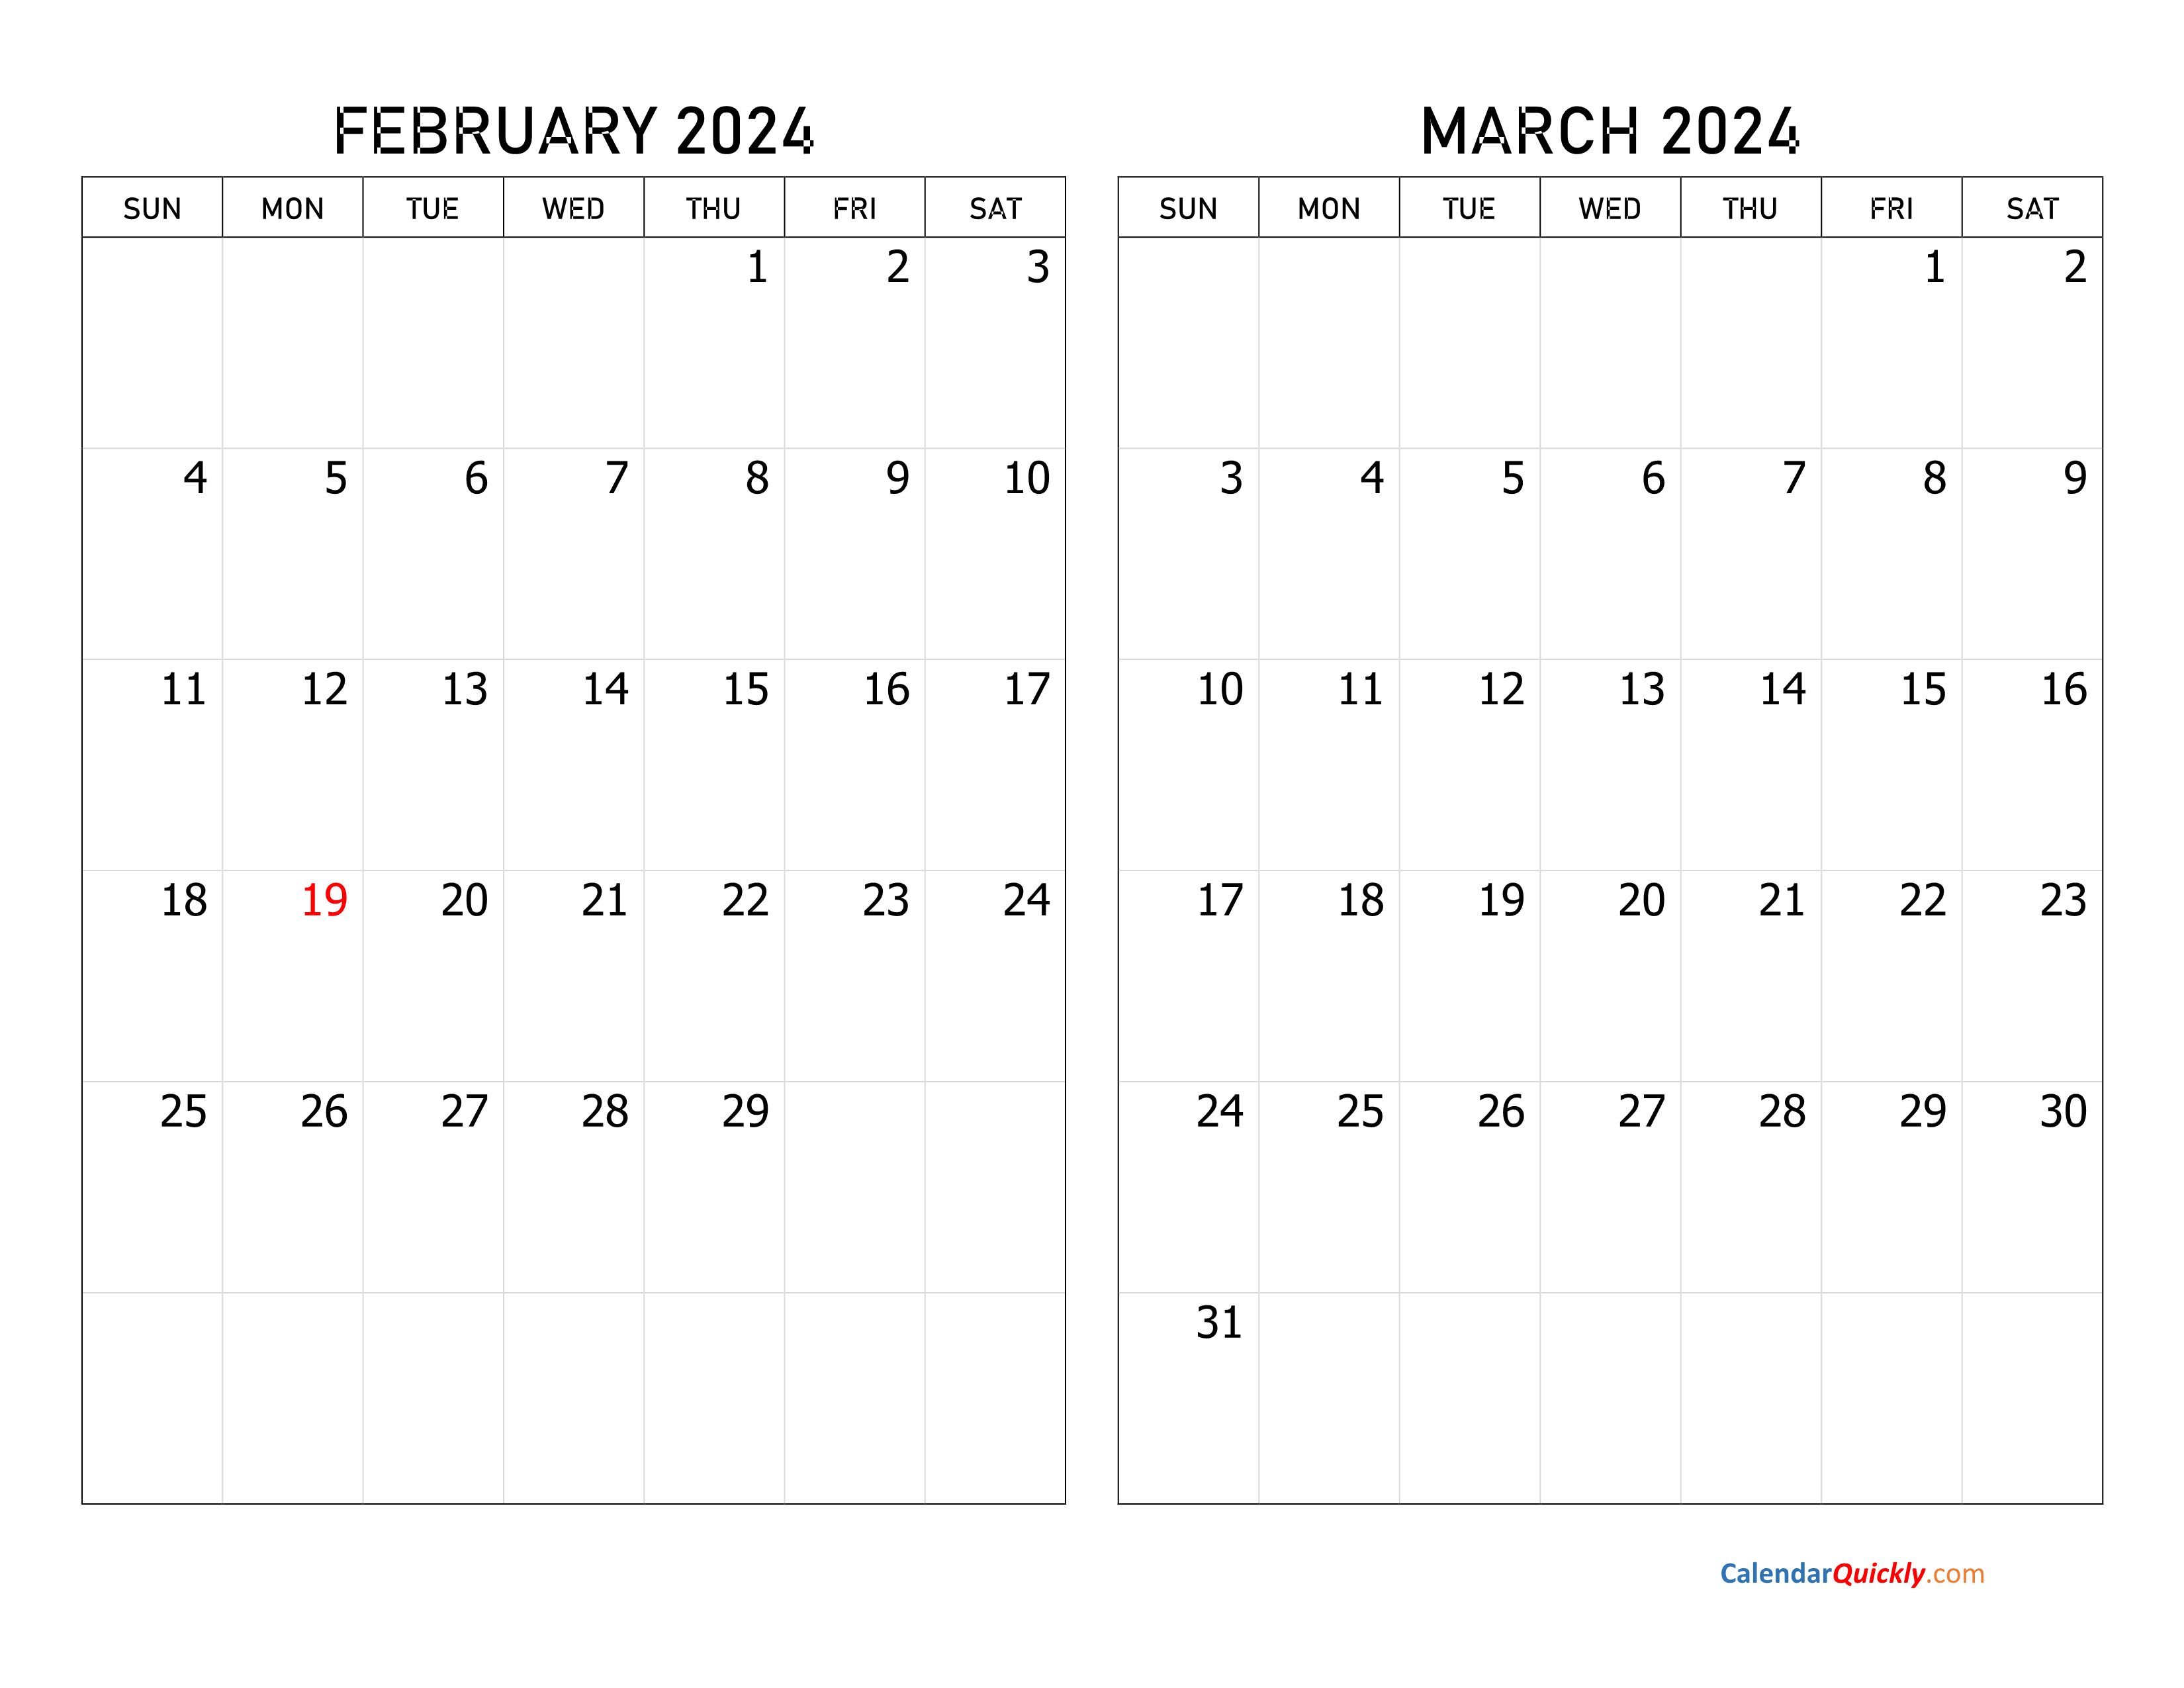 Календарь операций на март 2024 года